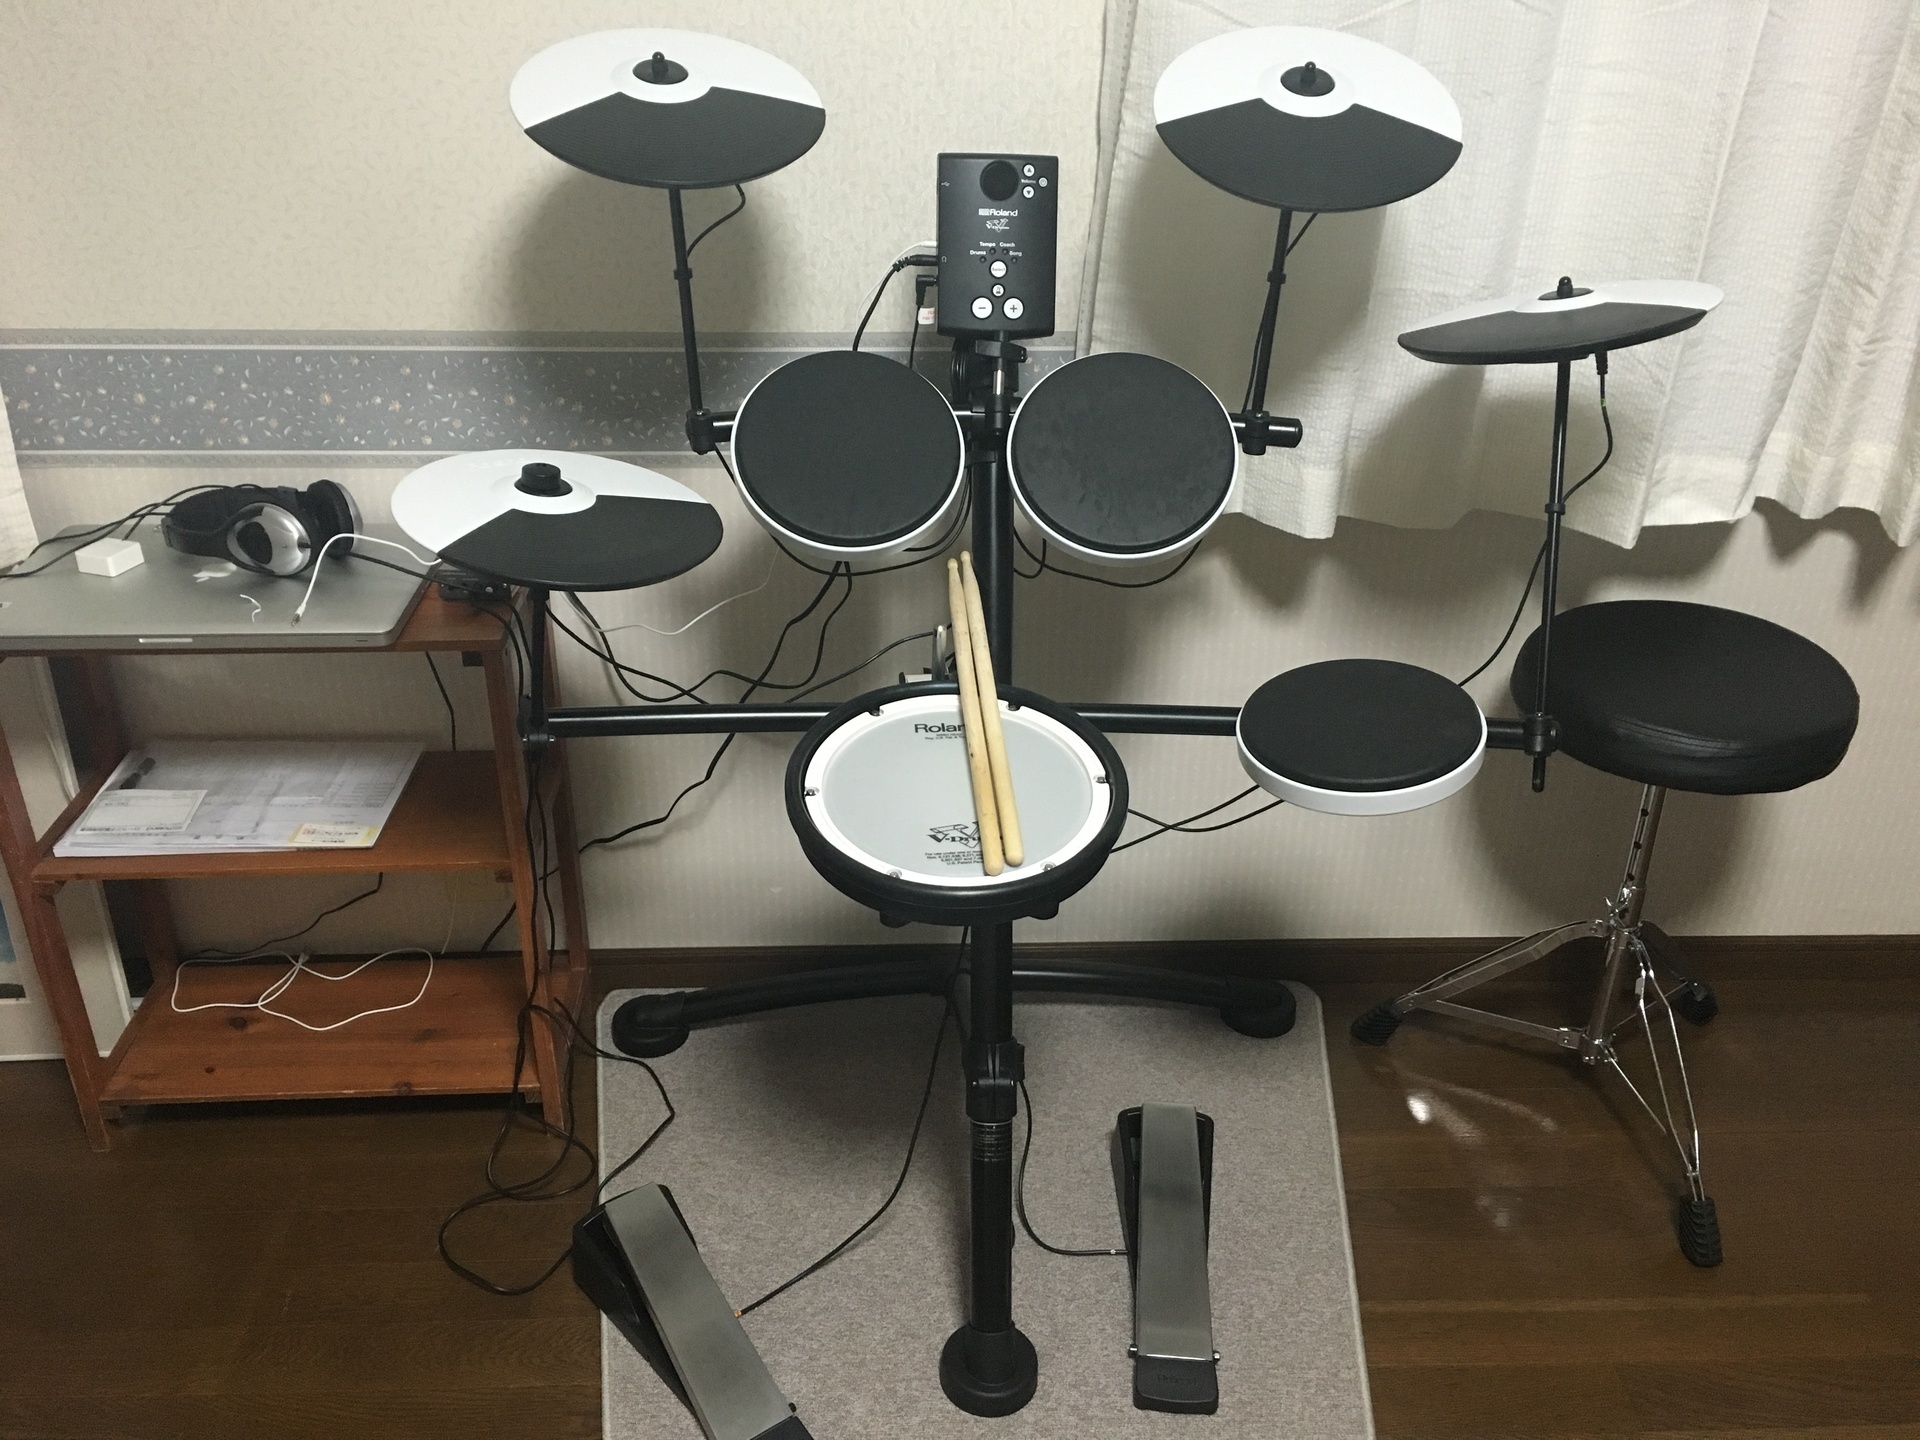 Roland ローランド 電子ドラム V Drums Td 1kv を買いました Kazusanjp の見聞録